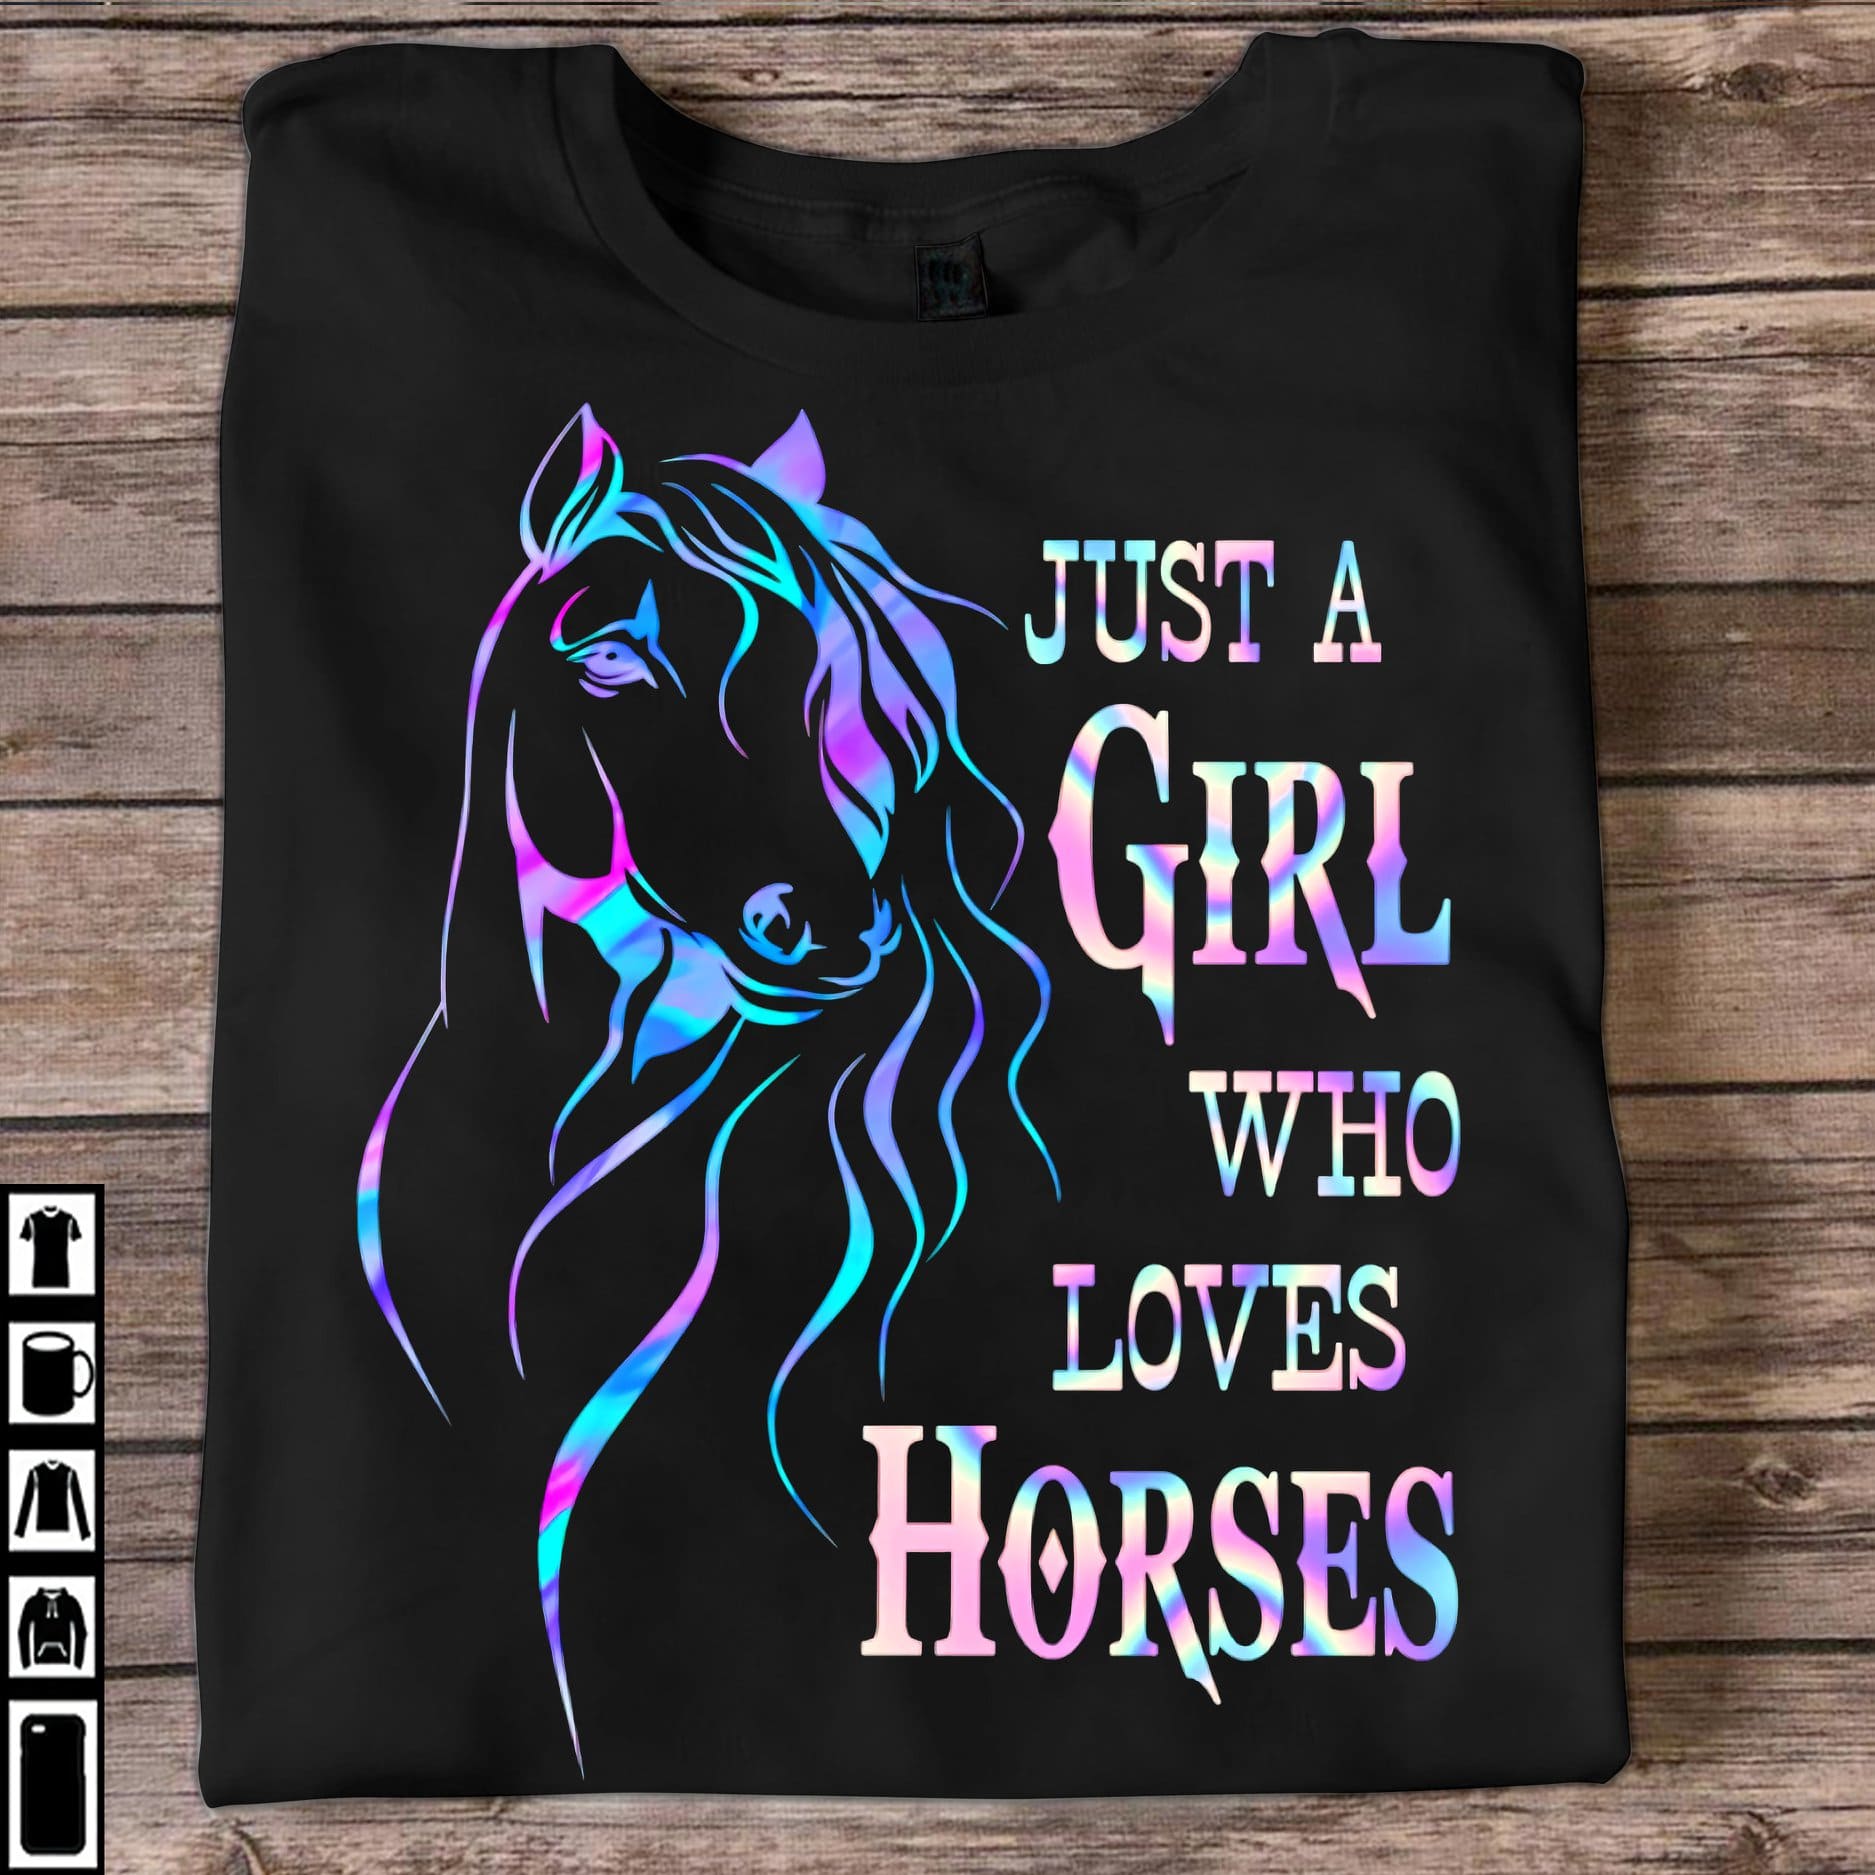 Just a girl who loves horses - Gift for horse girl, horse lover T-shirt